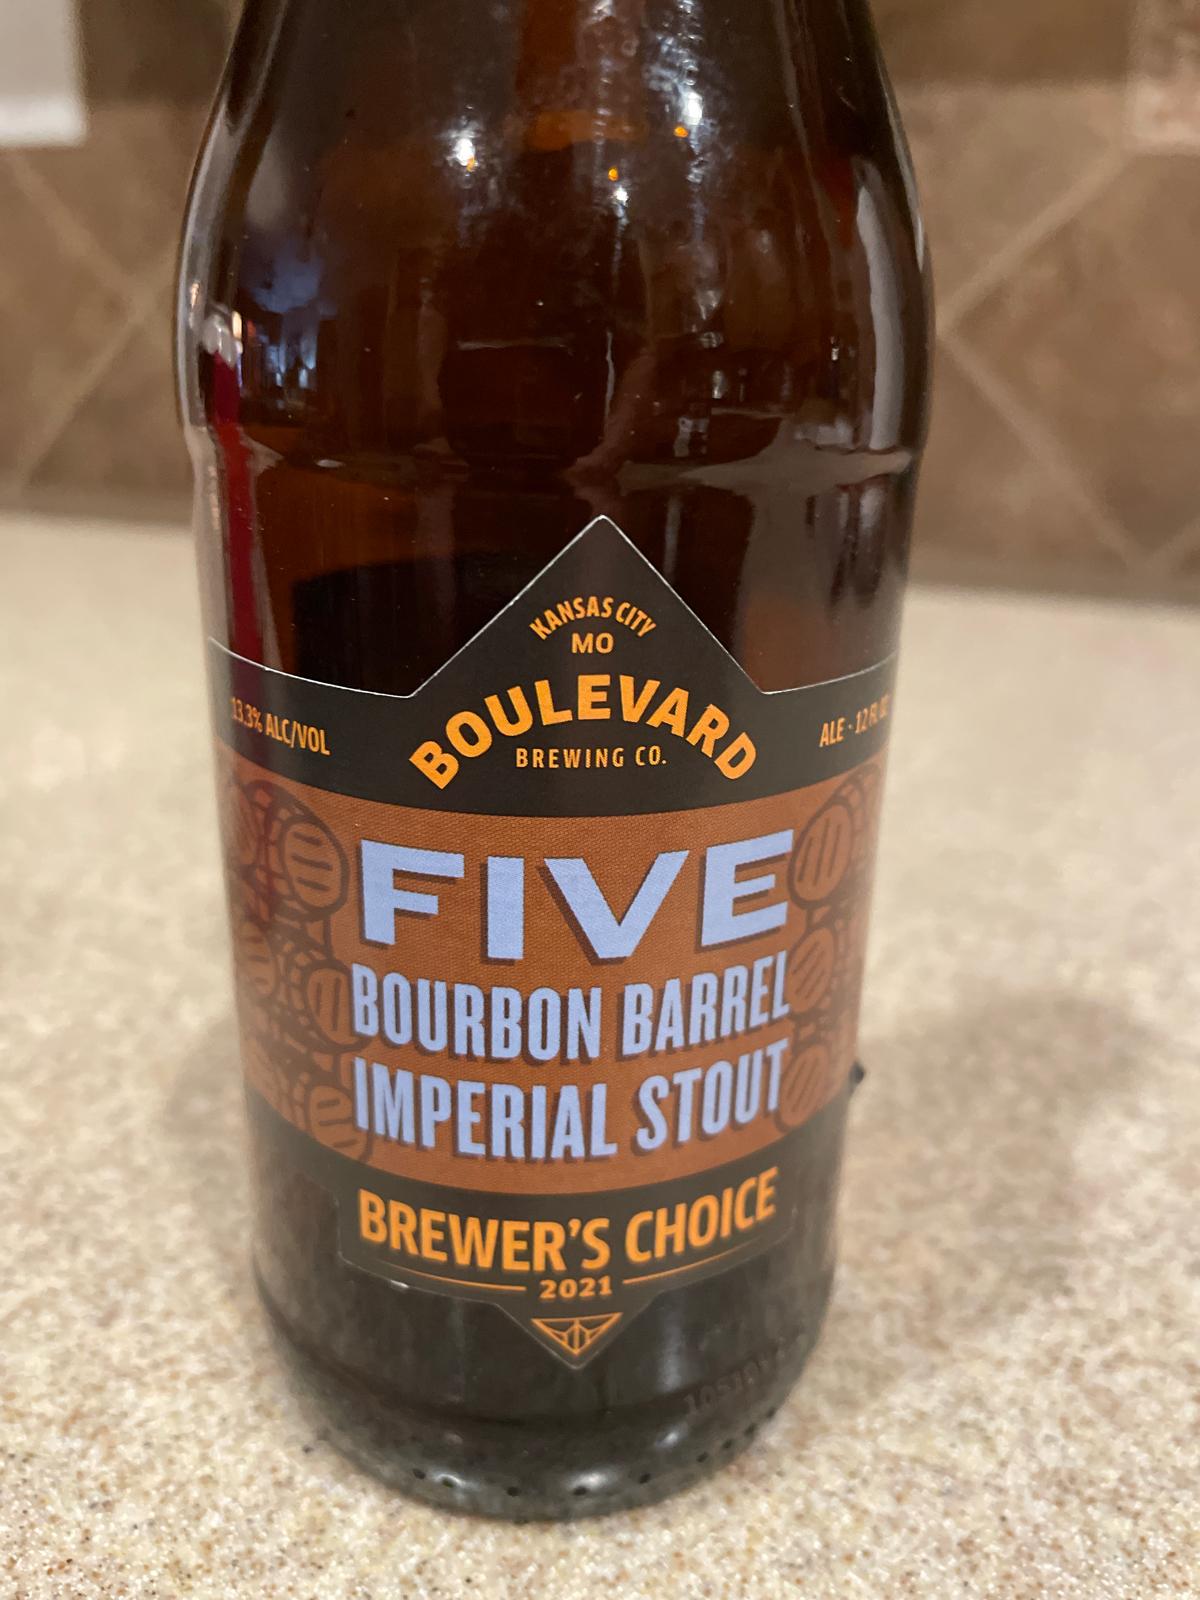 Imperial Stout (5 Bourbon Barrel Aged)